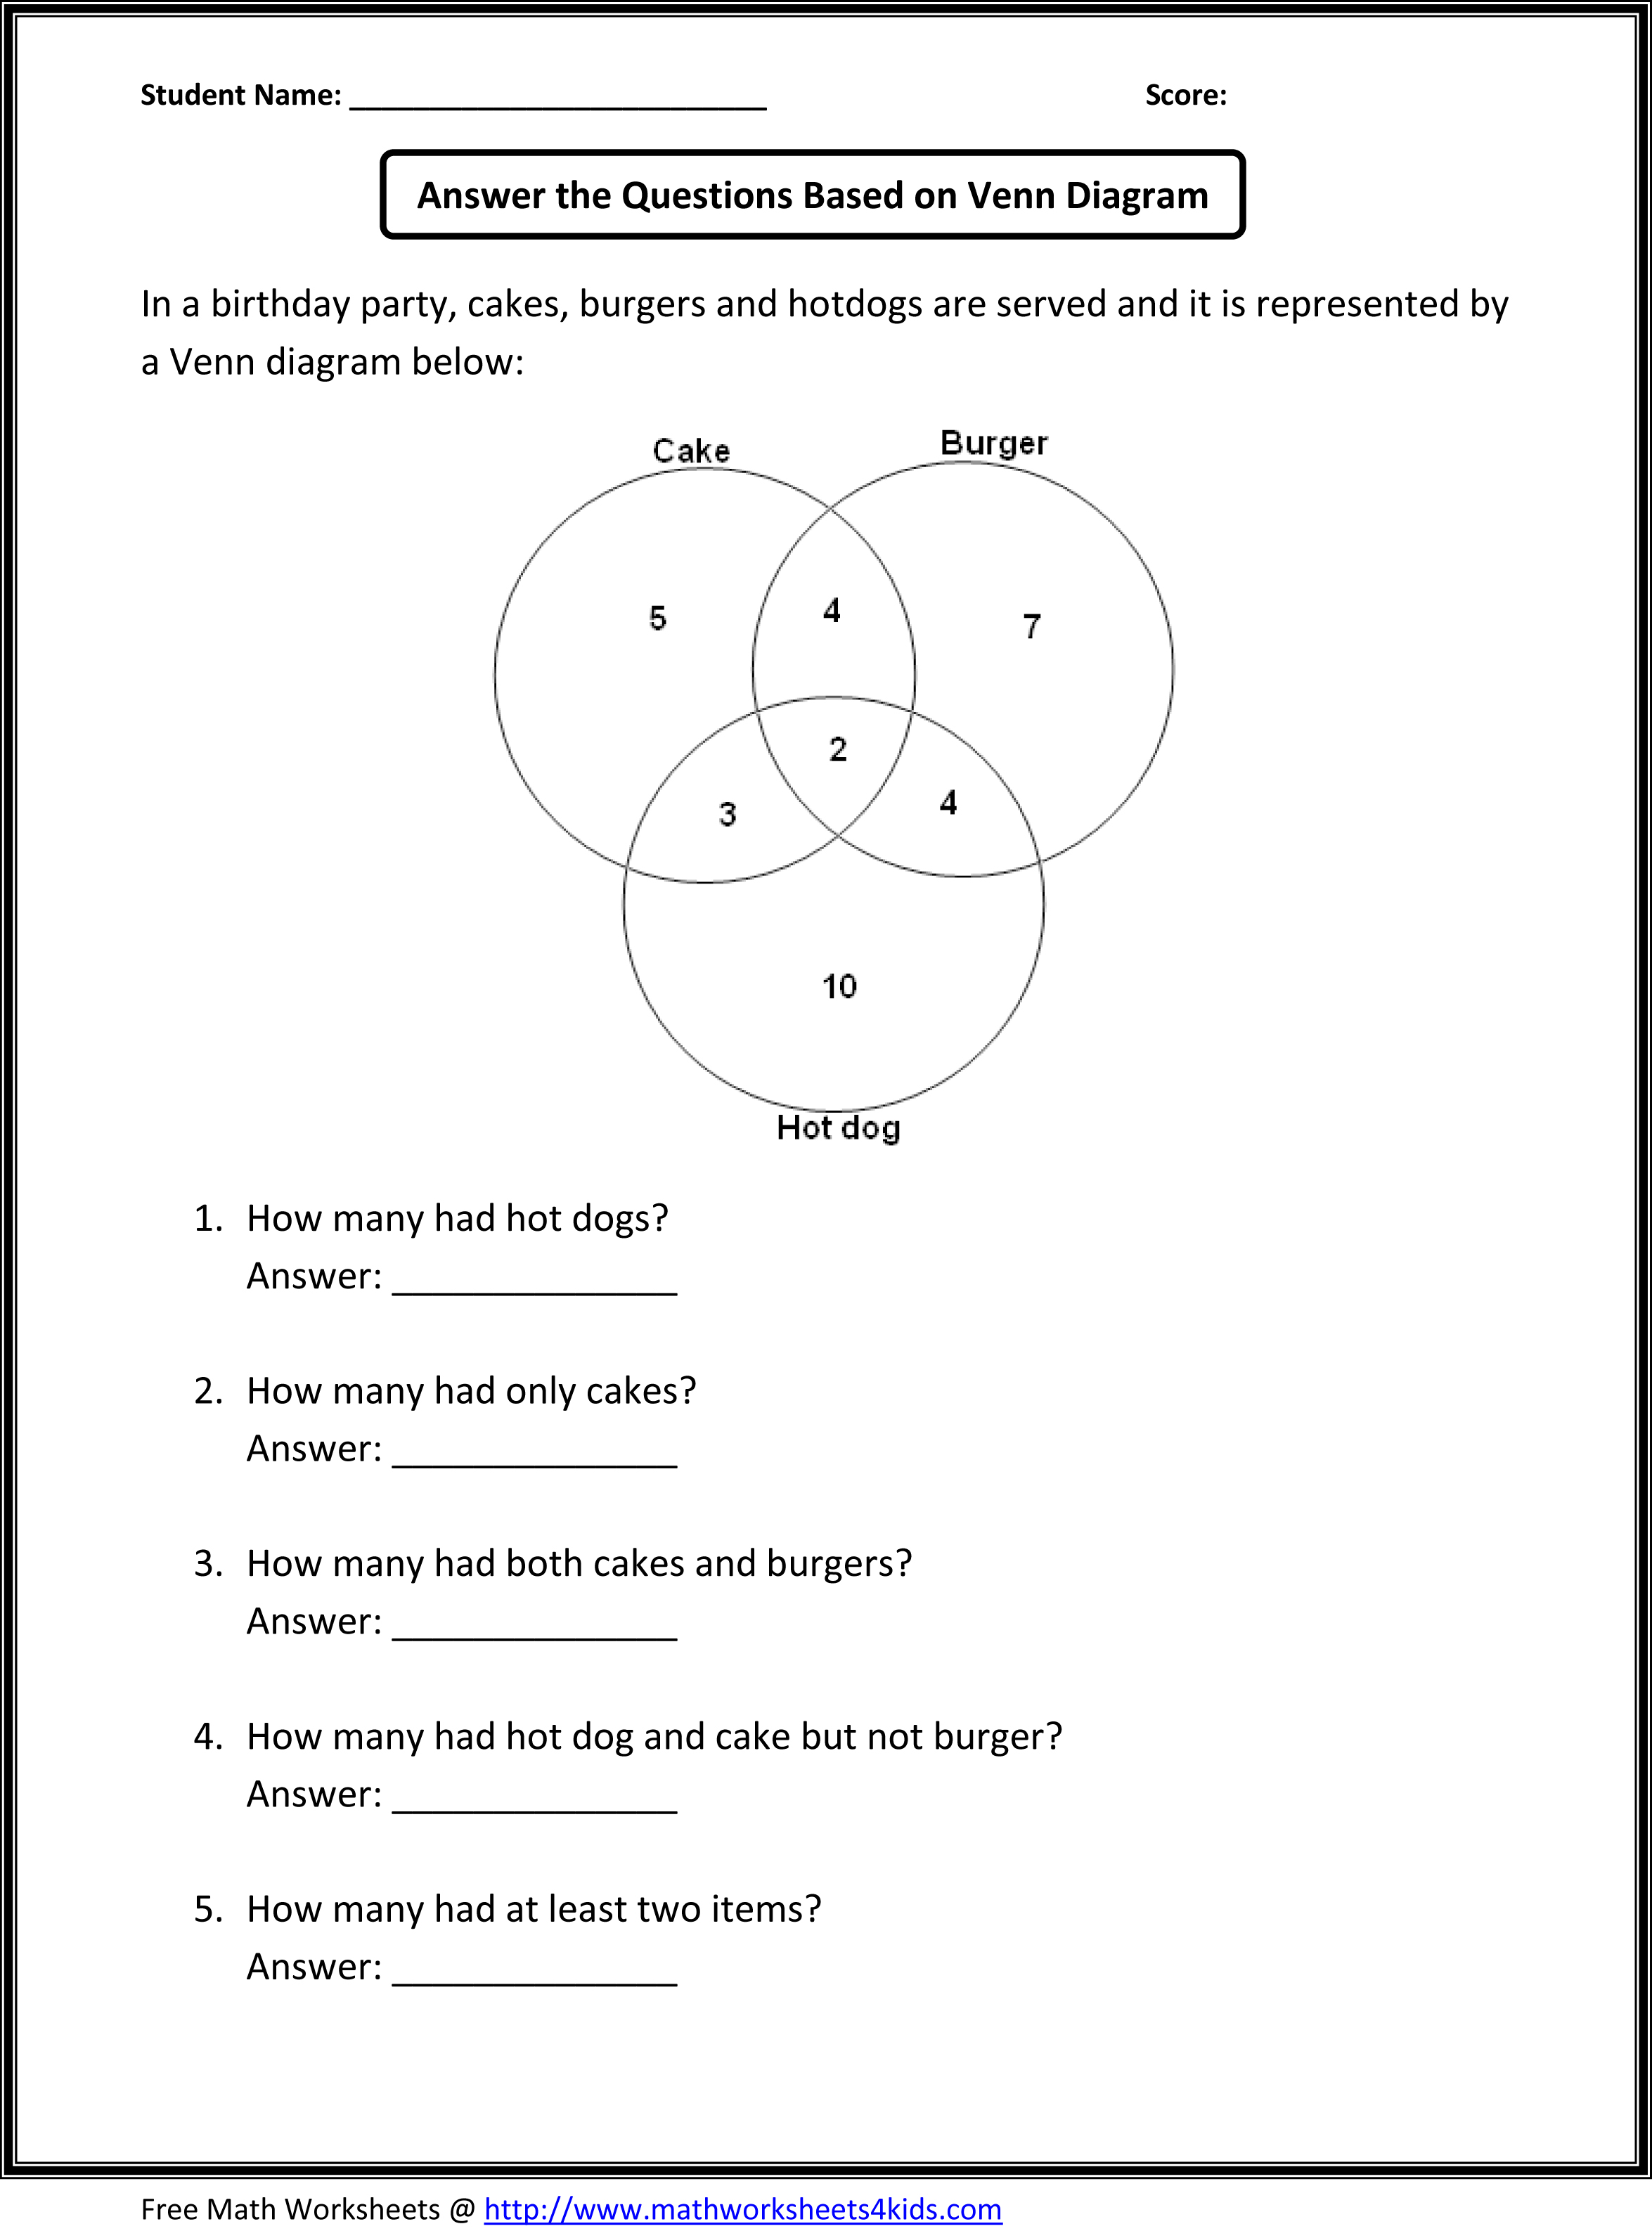 5th Grade Math Worksheets Printable Image